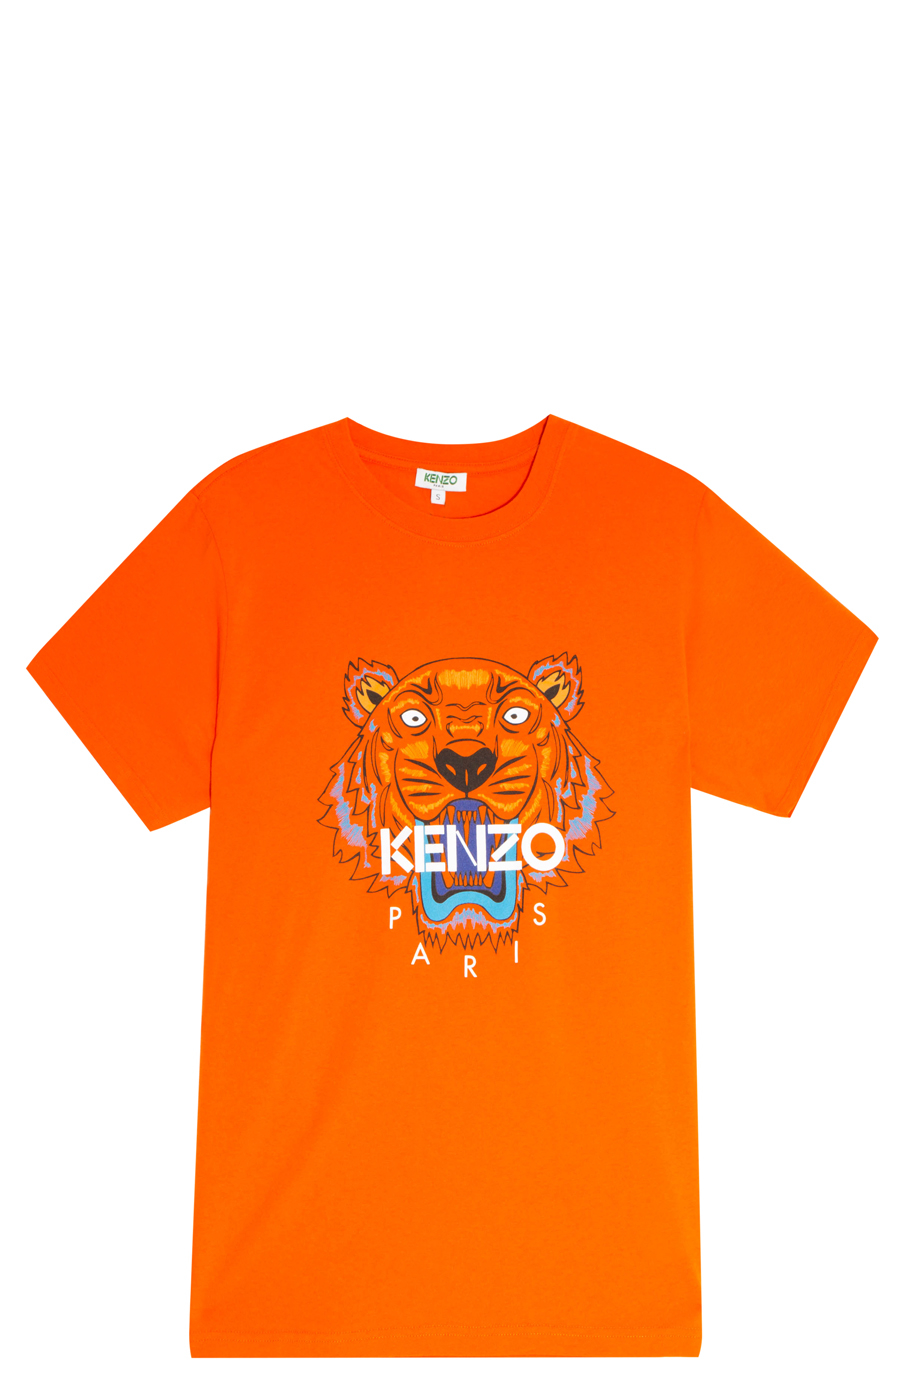 kenzo orange t shirt